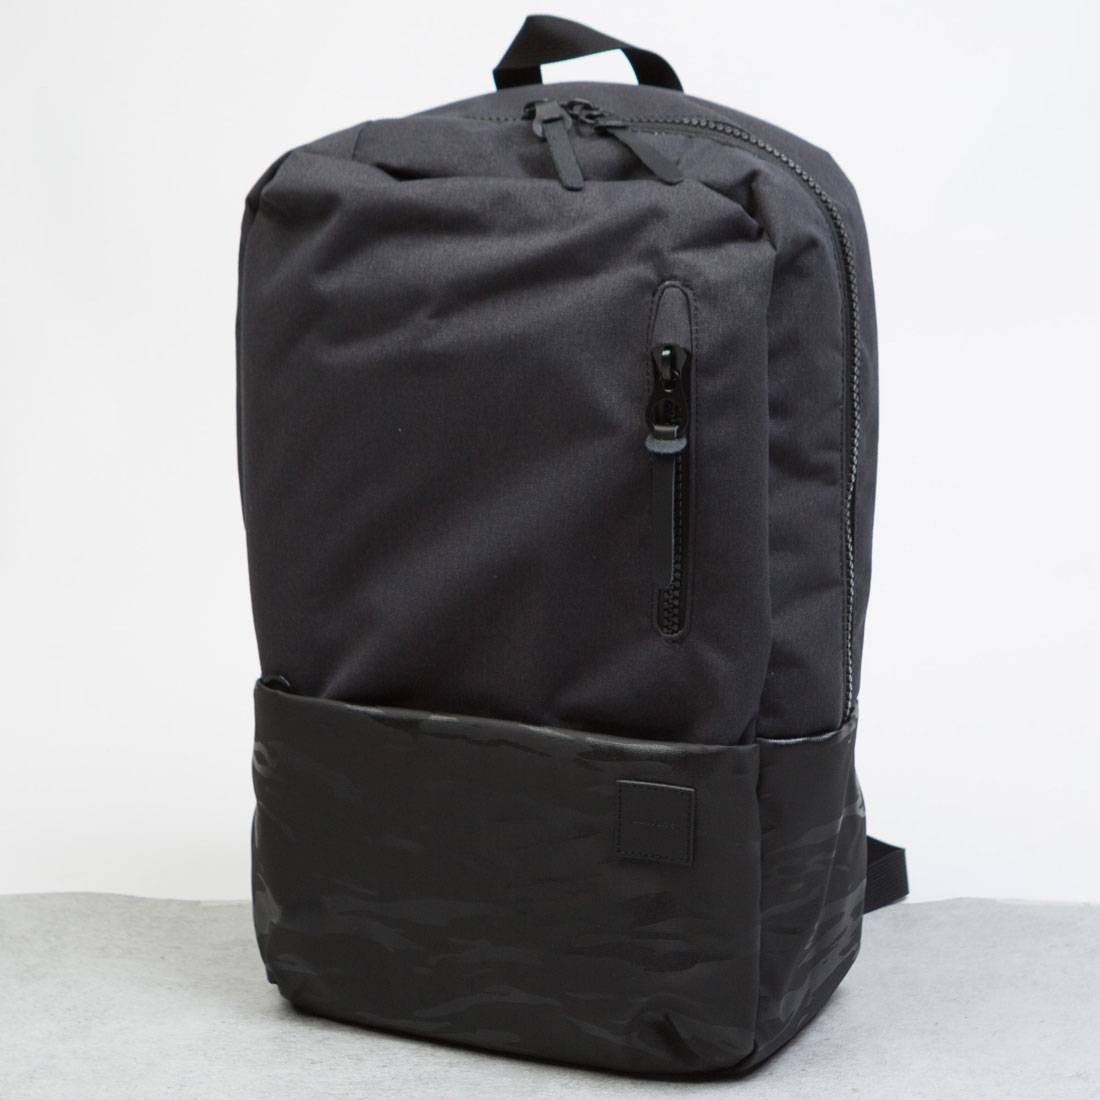 incase backpack